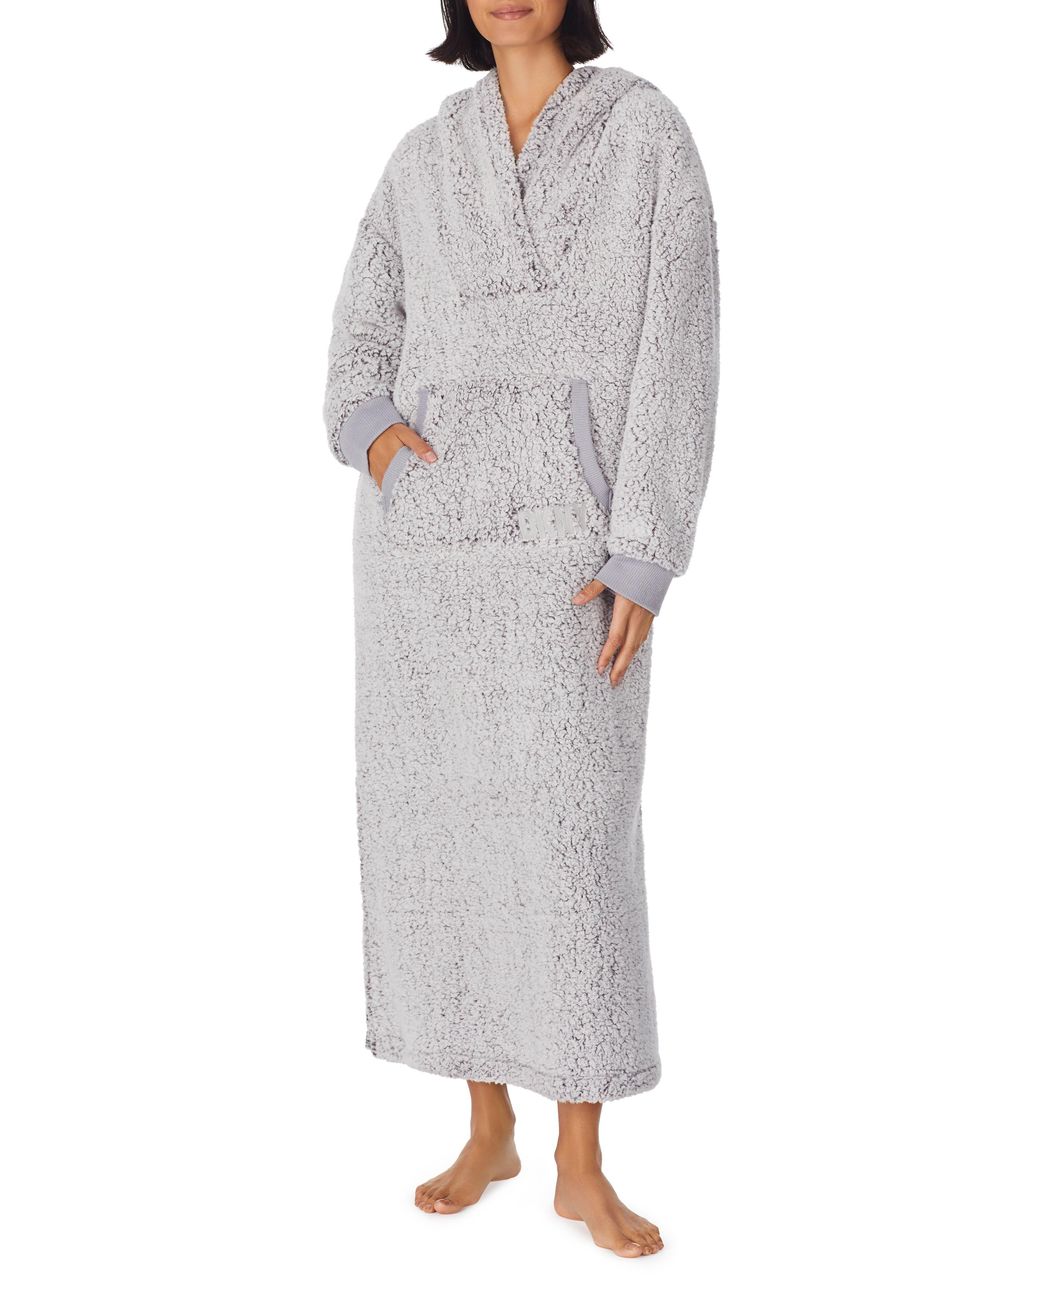 Women Fleece Hooded Bathrobe - Plush Long Robe in Lot NY Threads | eBay